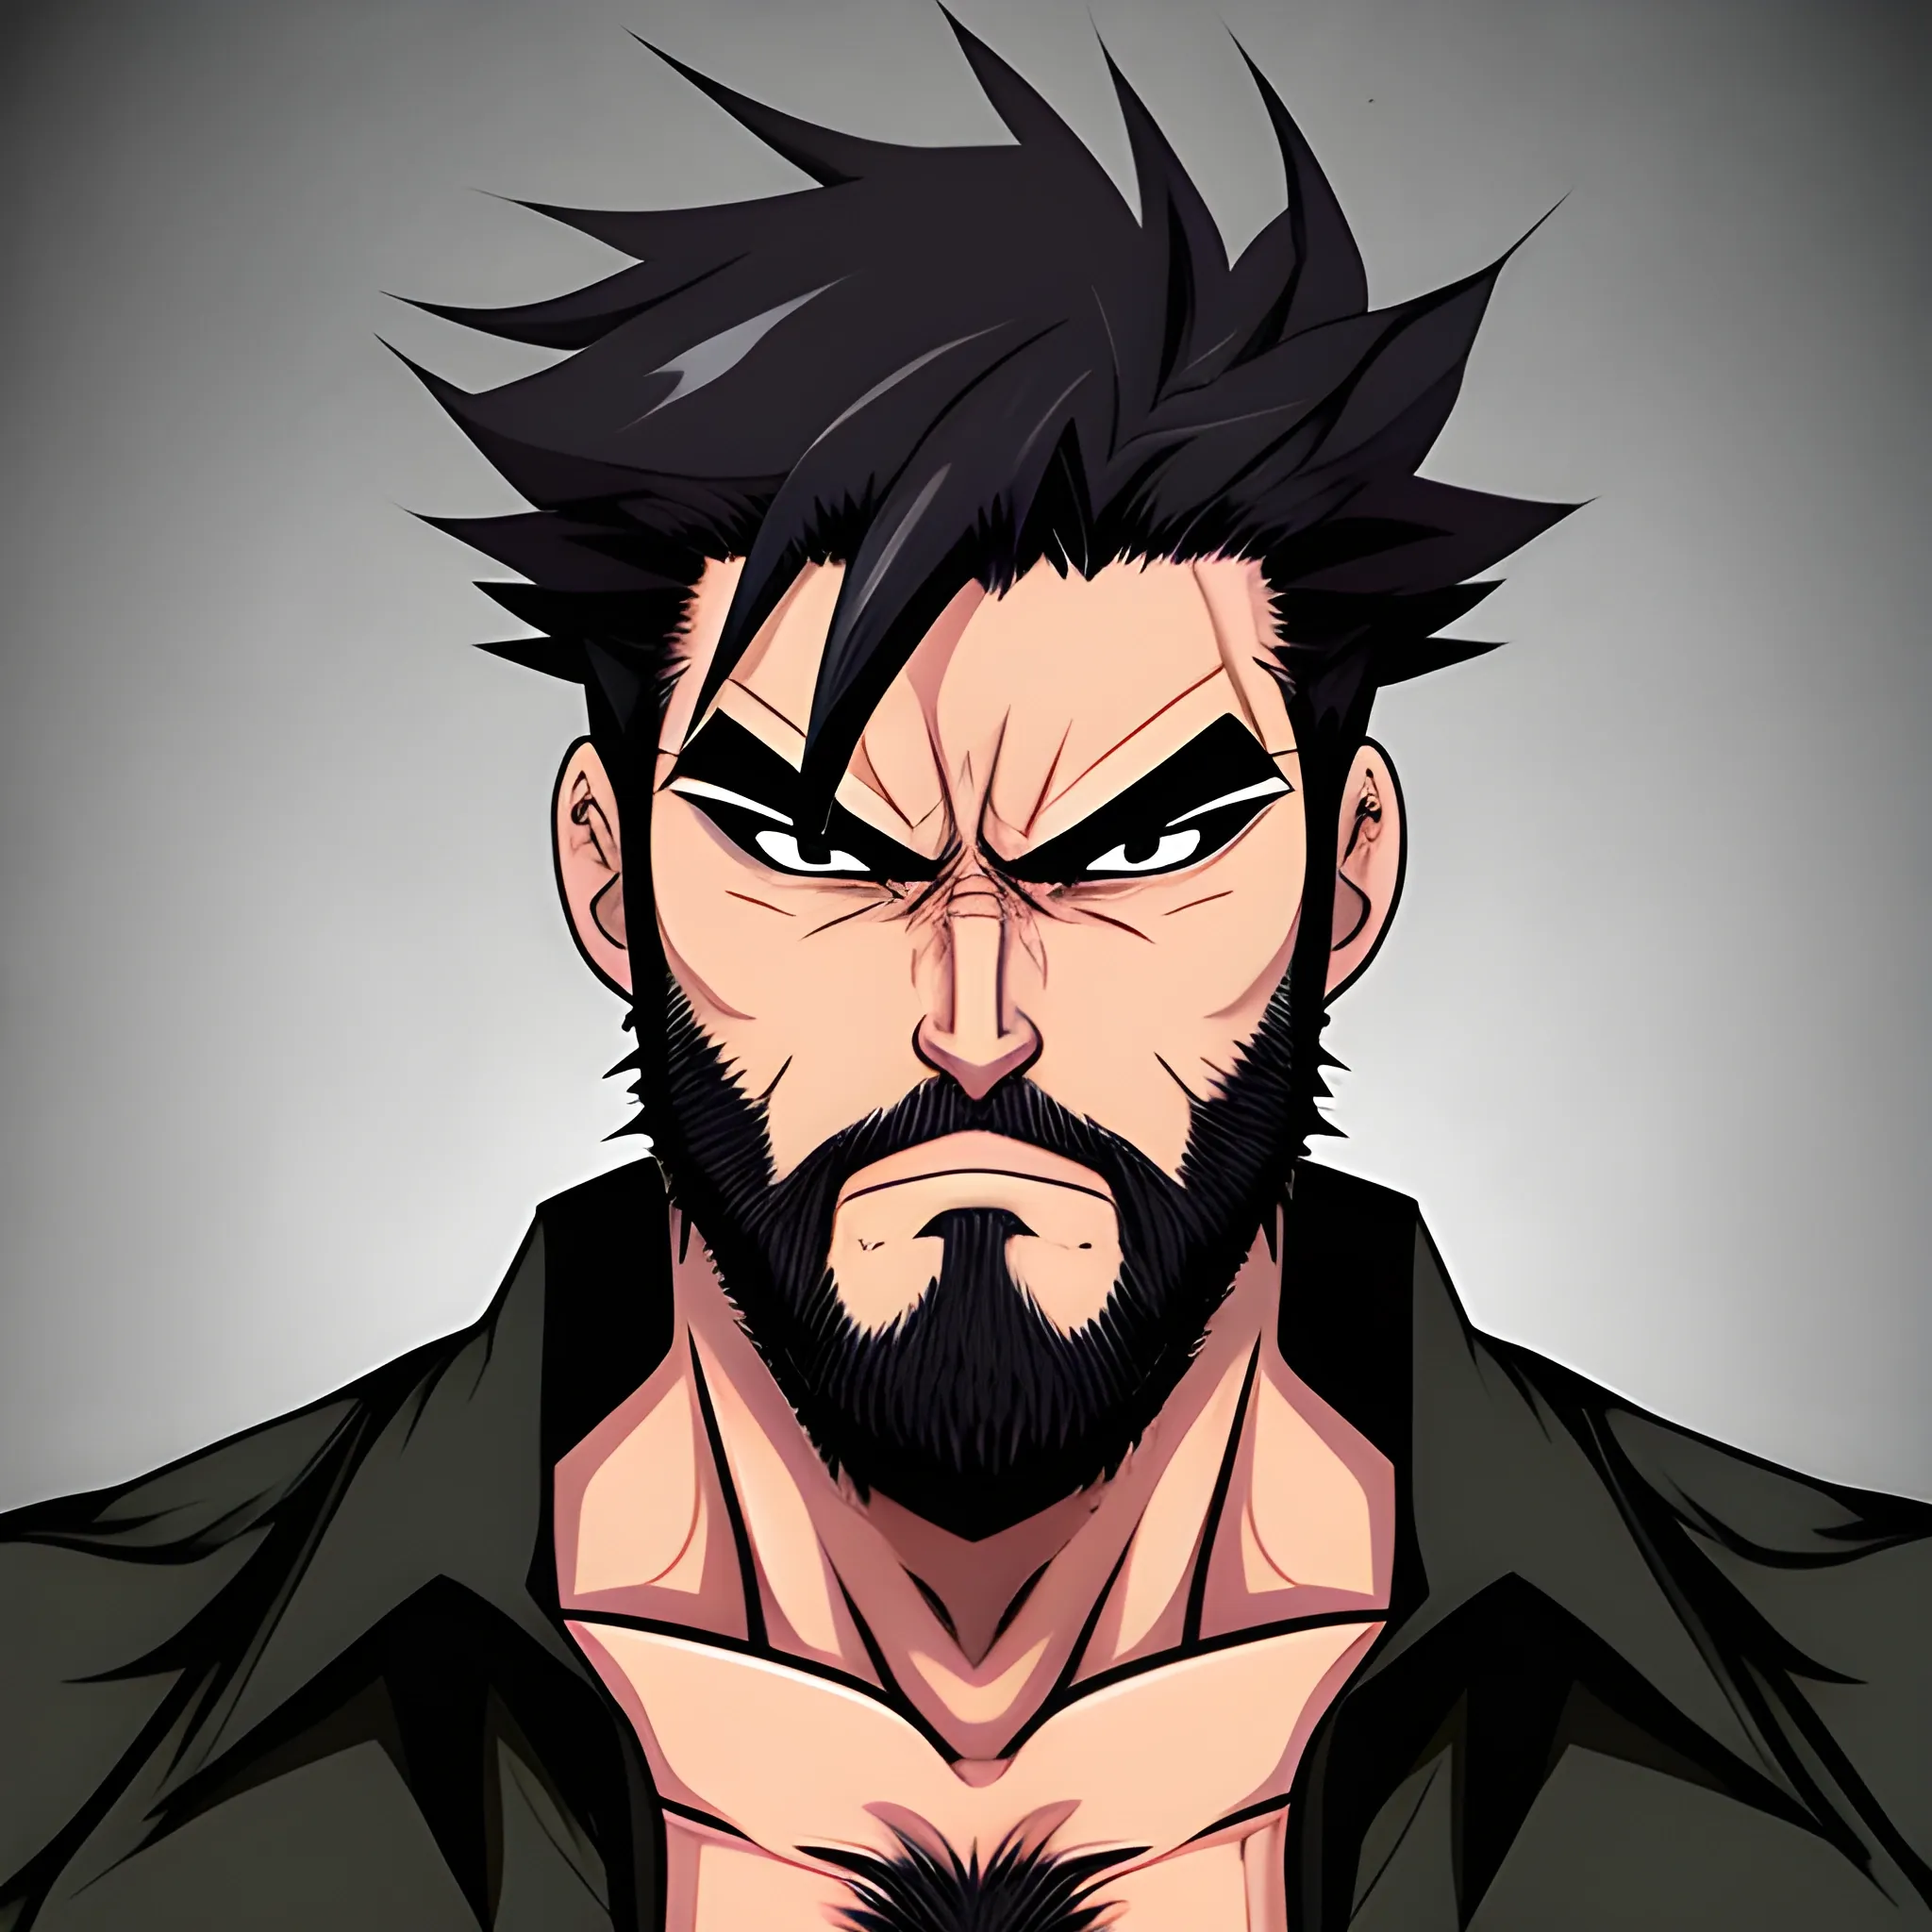 Anime beard | Anime guys with glasses, Beard cartoon, Anime